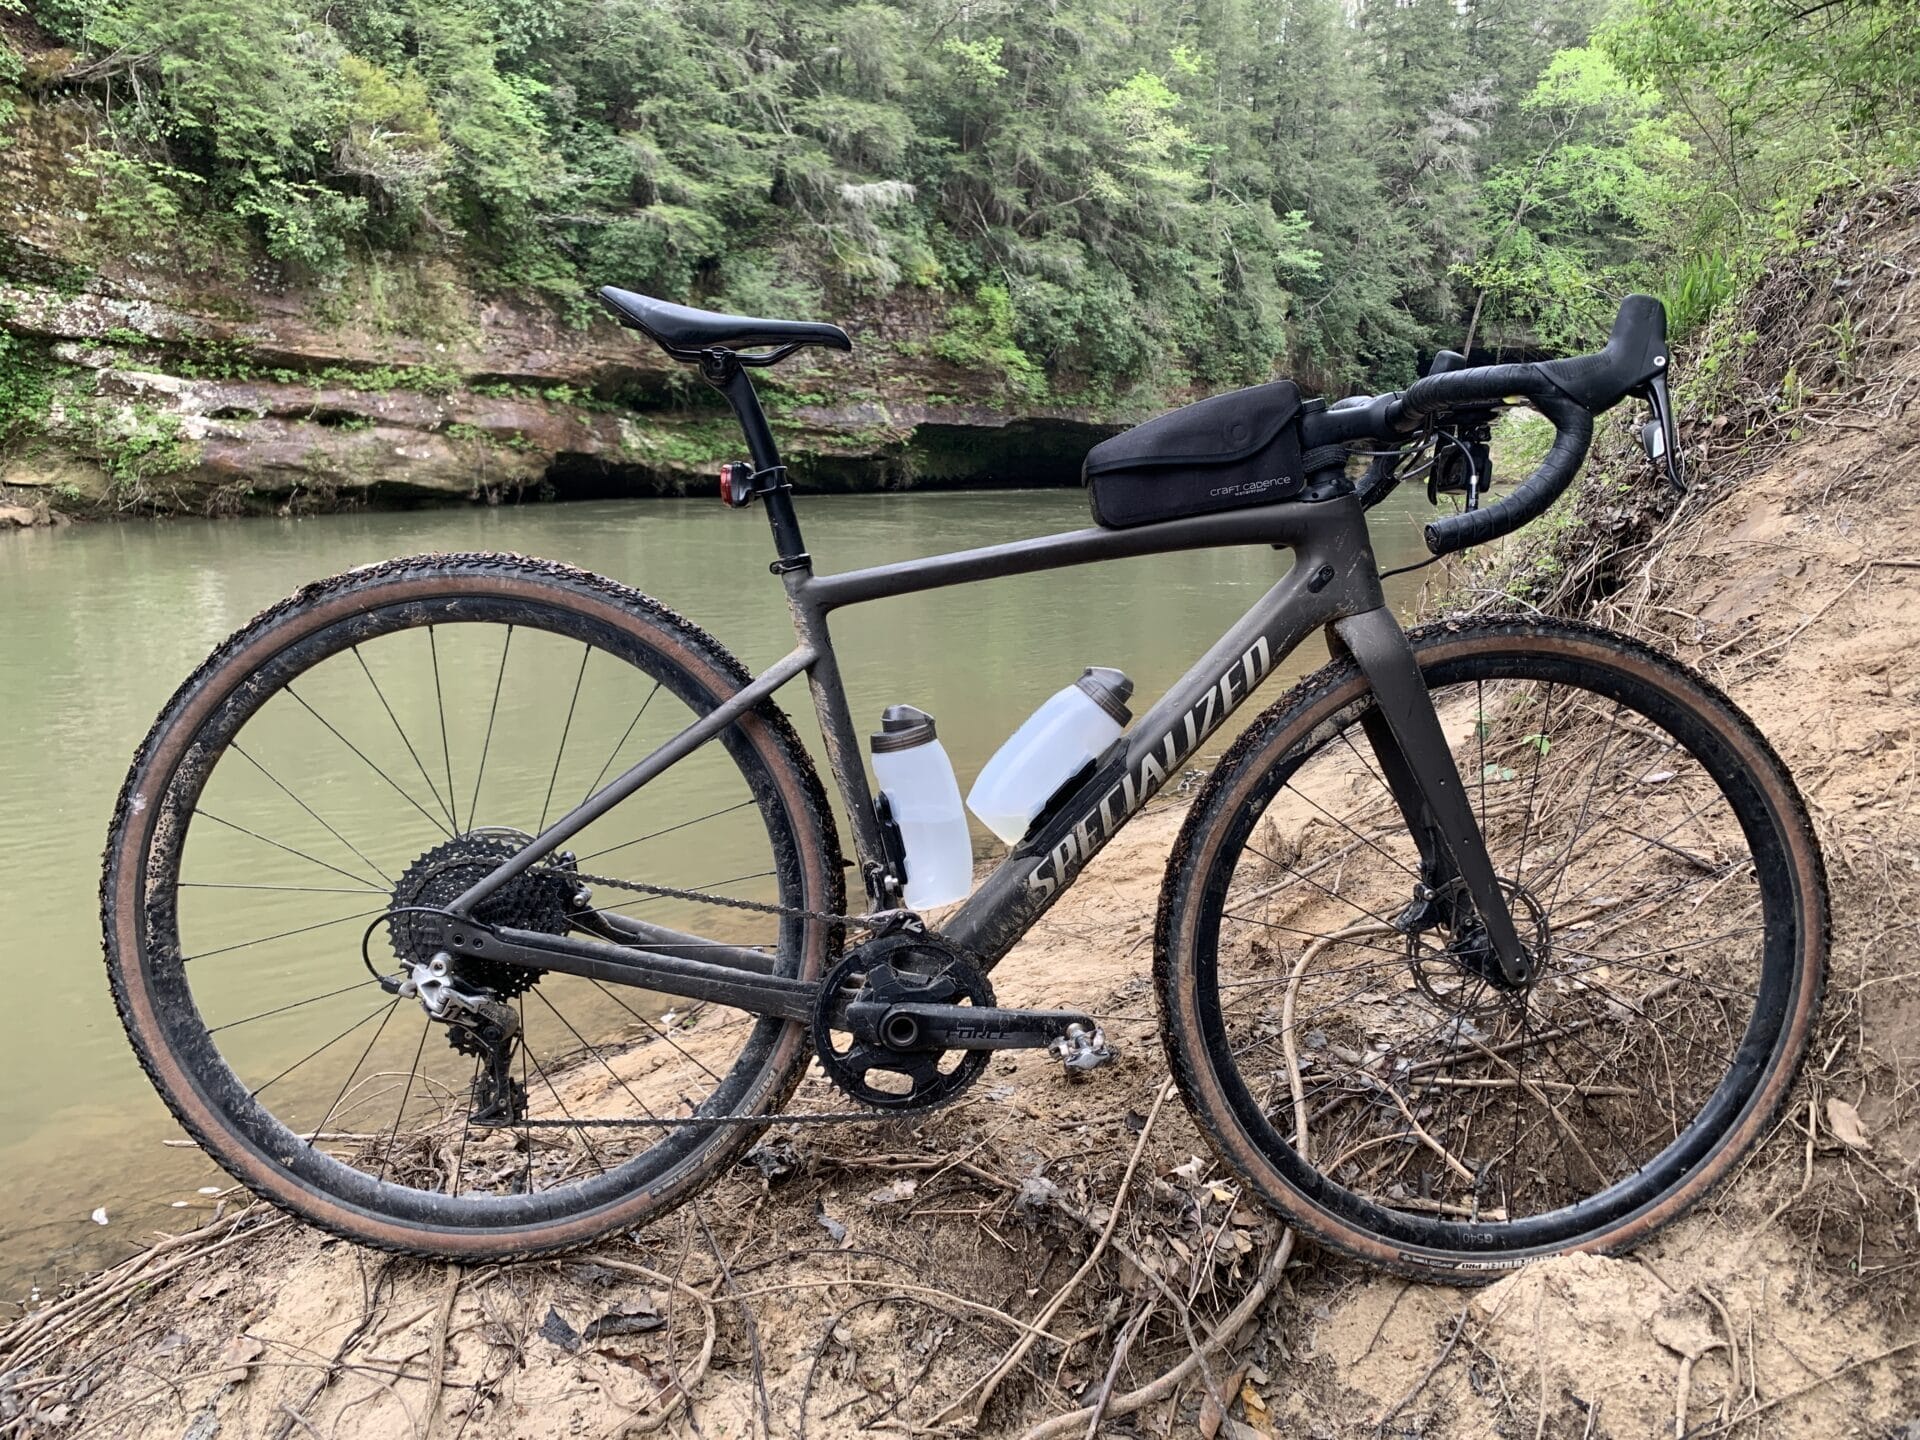 Fidlock bottle on gravel bike with river in background